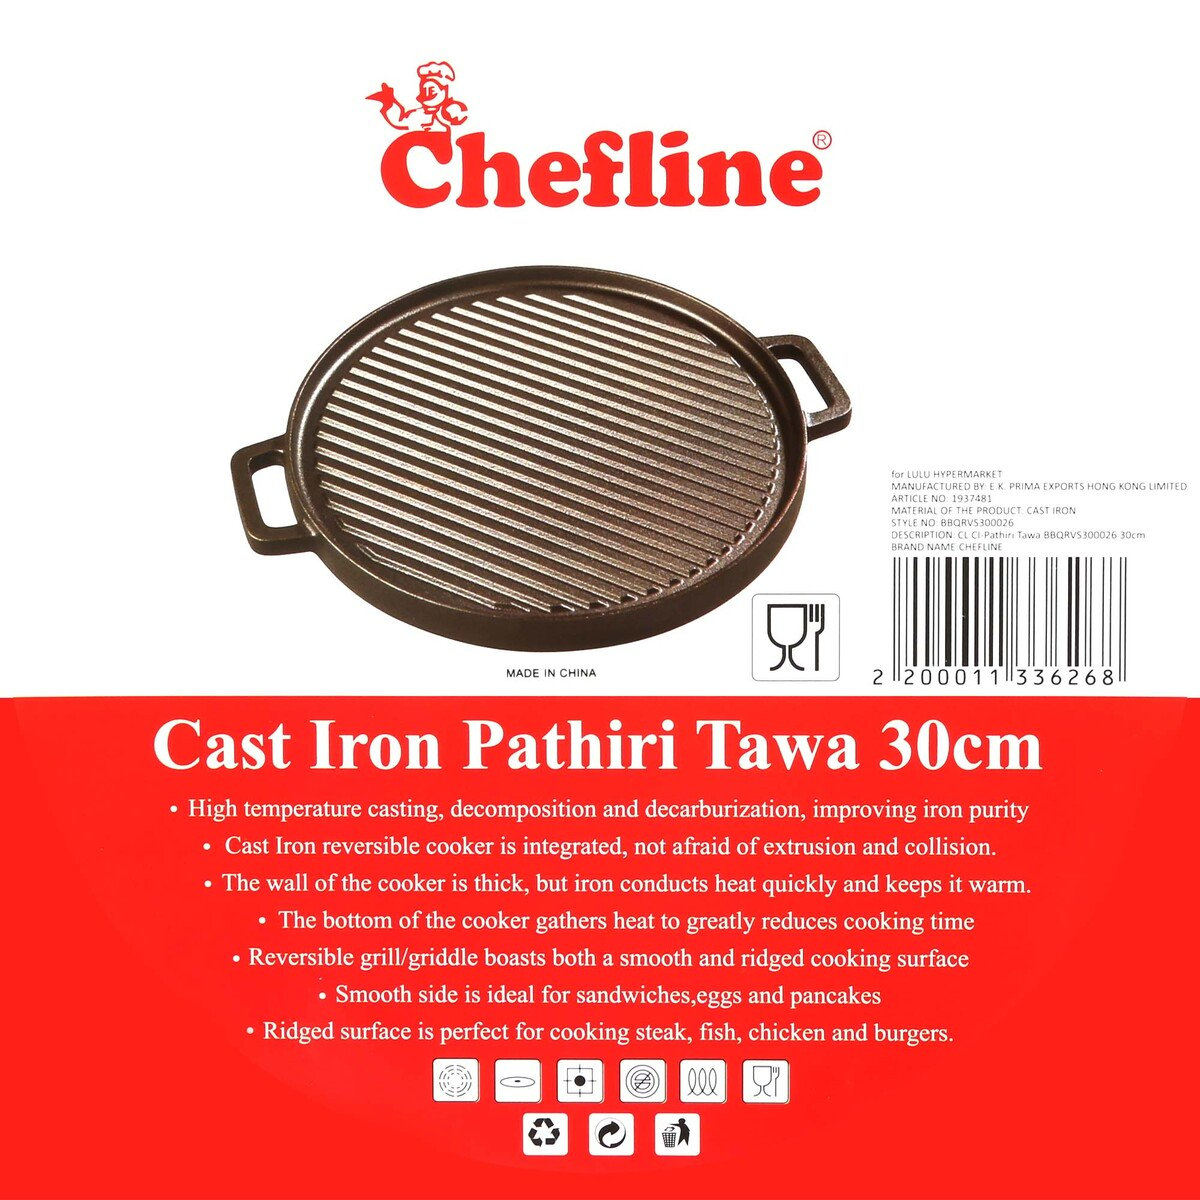 Chefline Cast Iron Pathiri Tawa / Reversible Grill, 30 cm, W260084